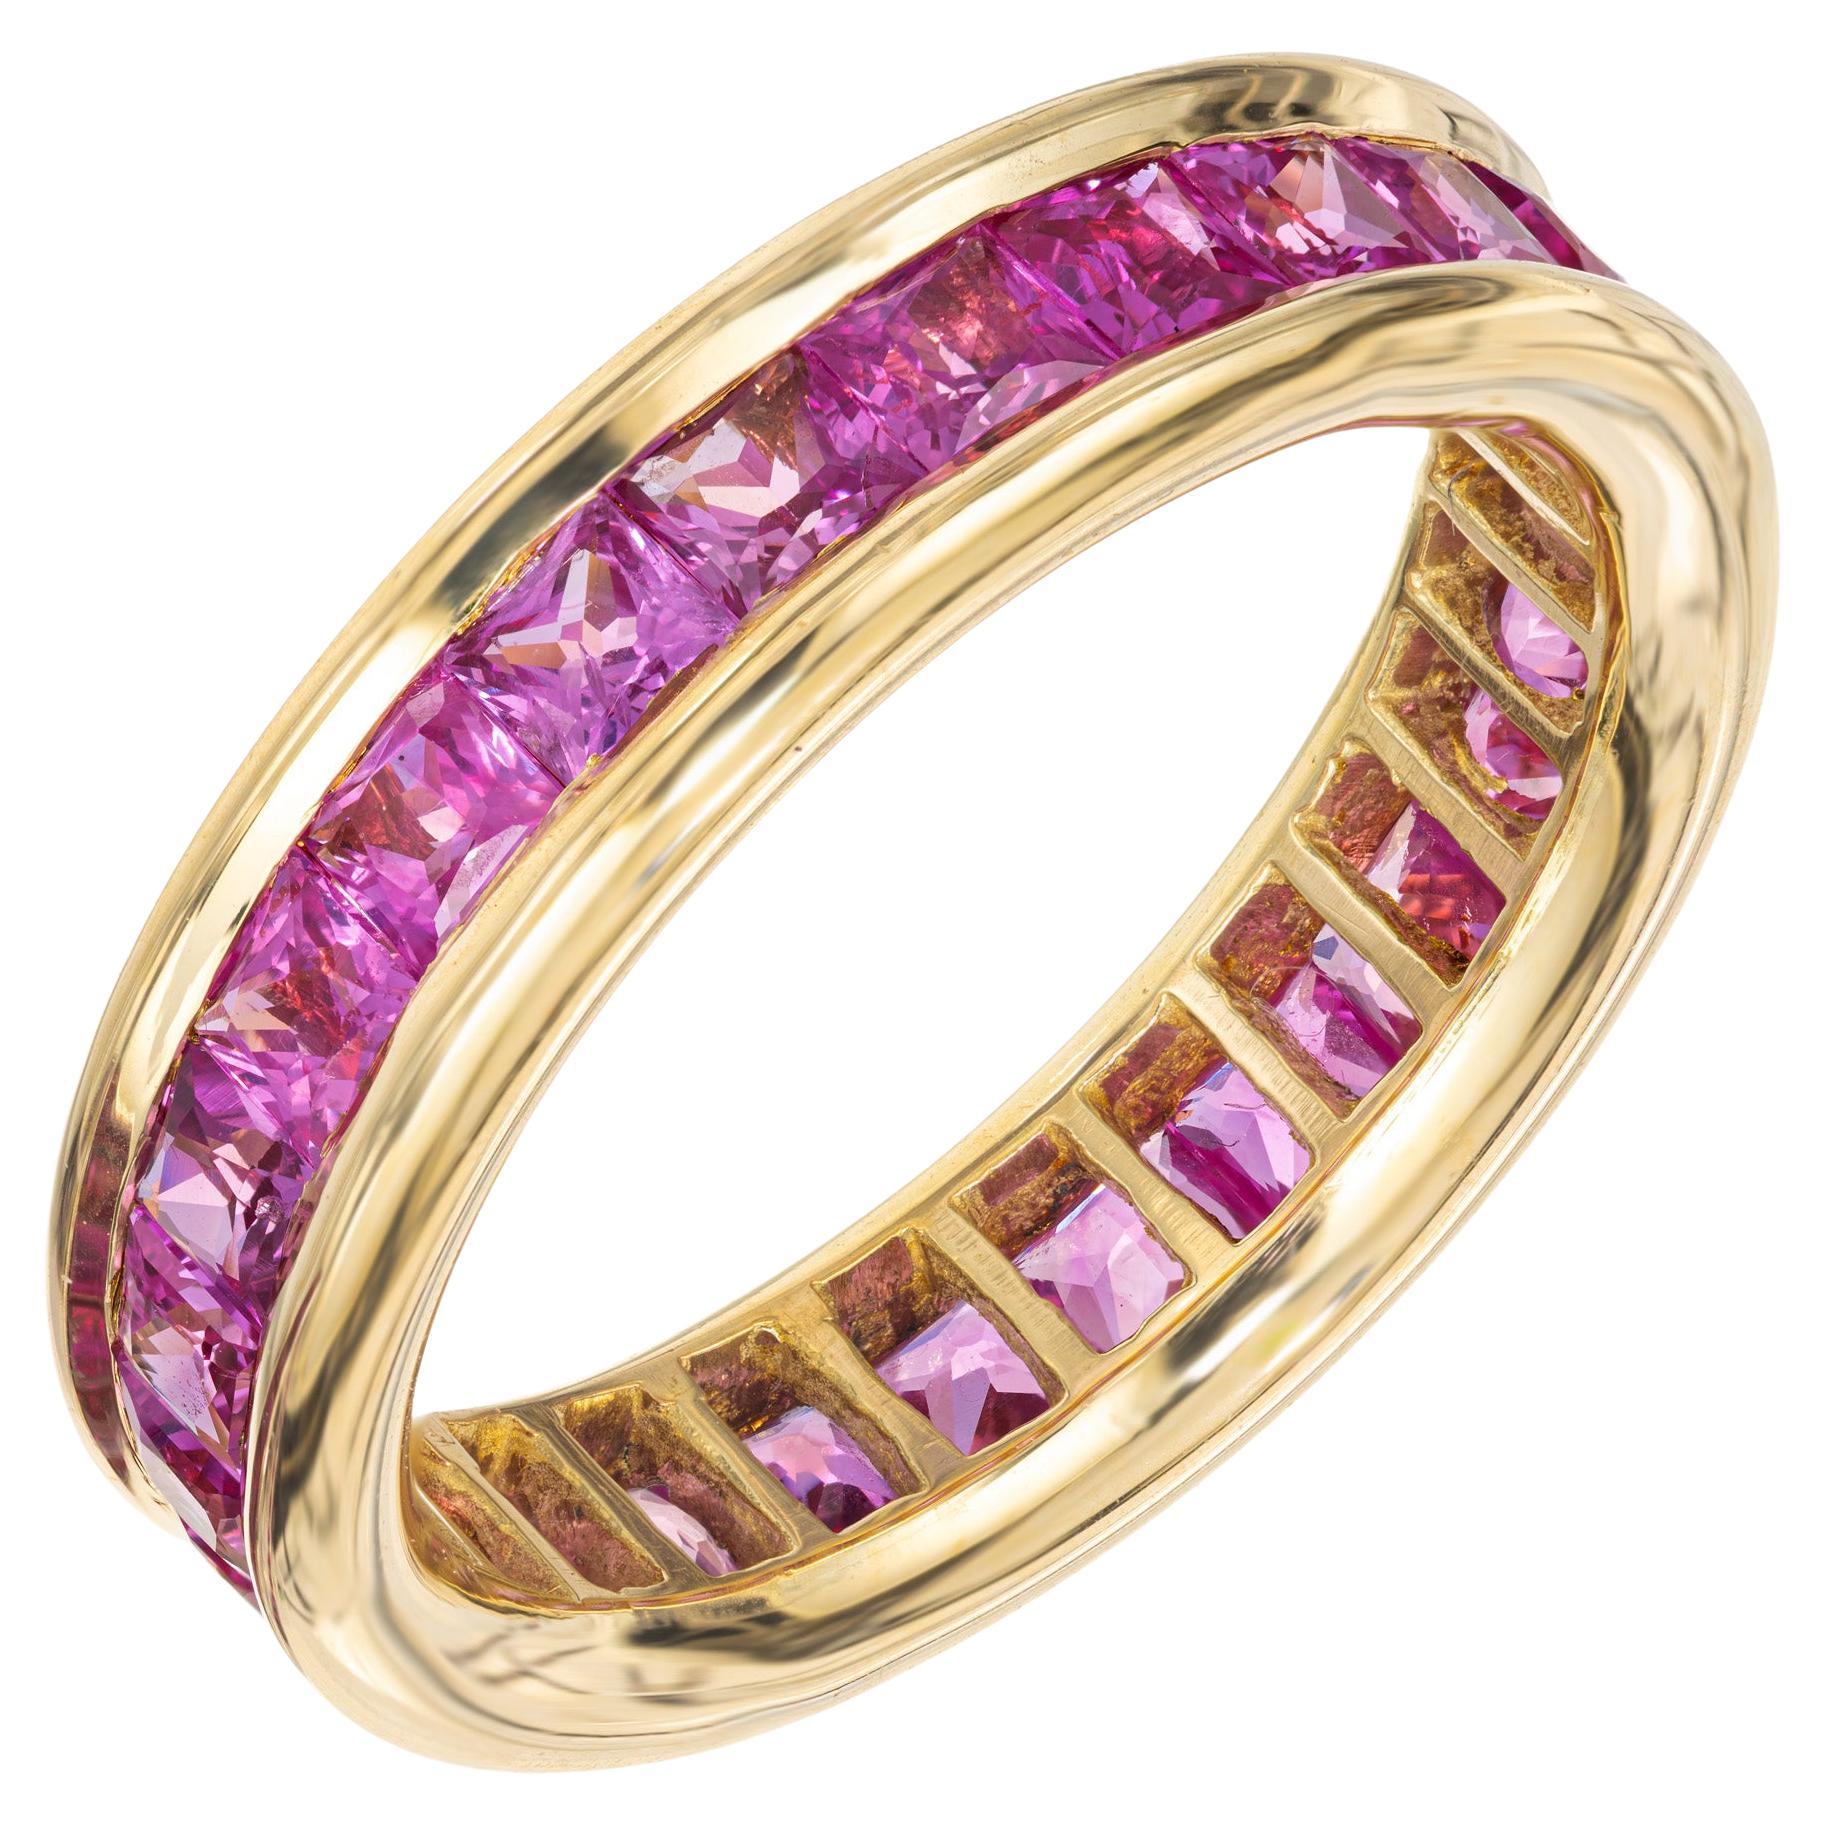 3.75 Carat Princess Cut Pink Sapphire Gold Eternity Wedding Band Ring